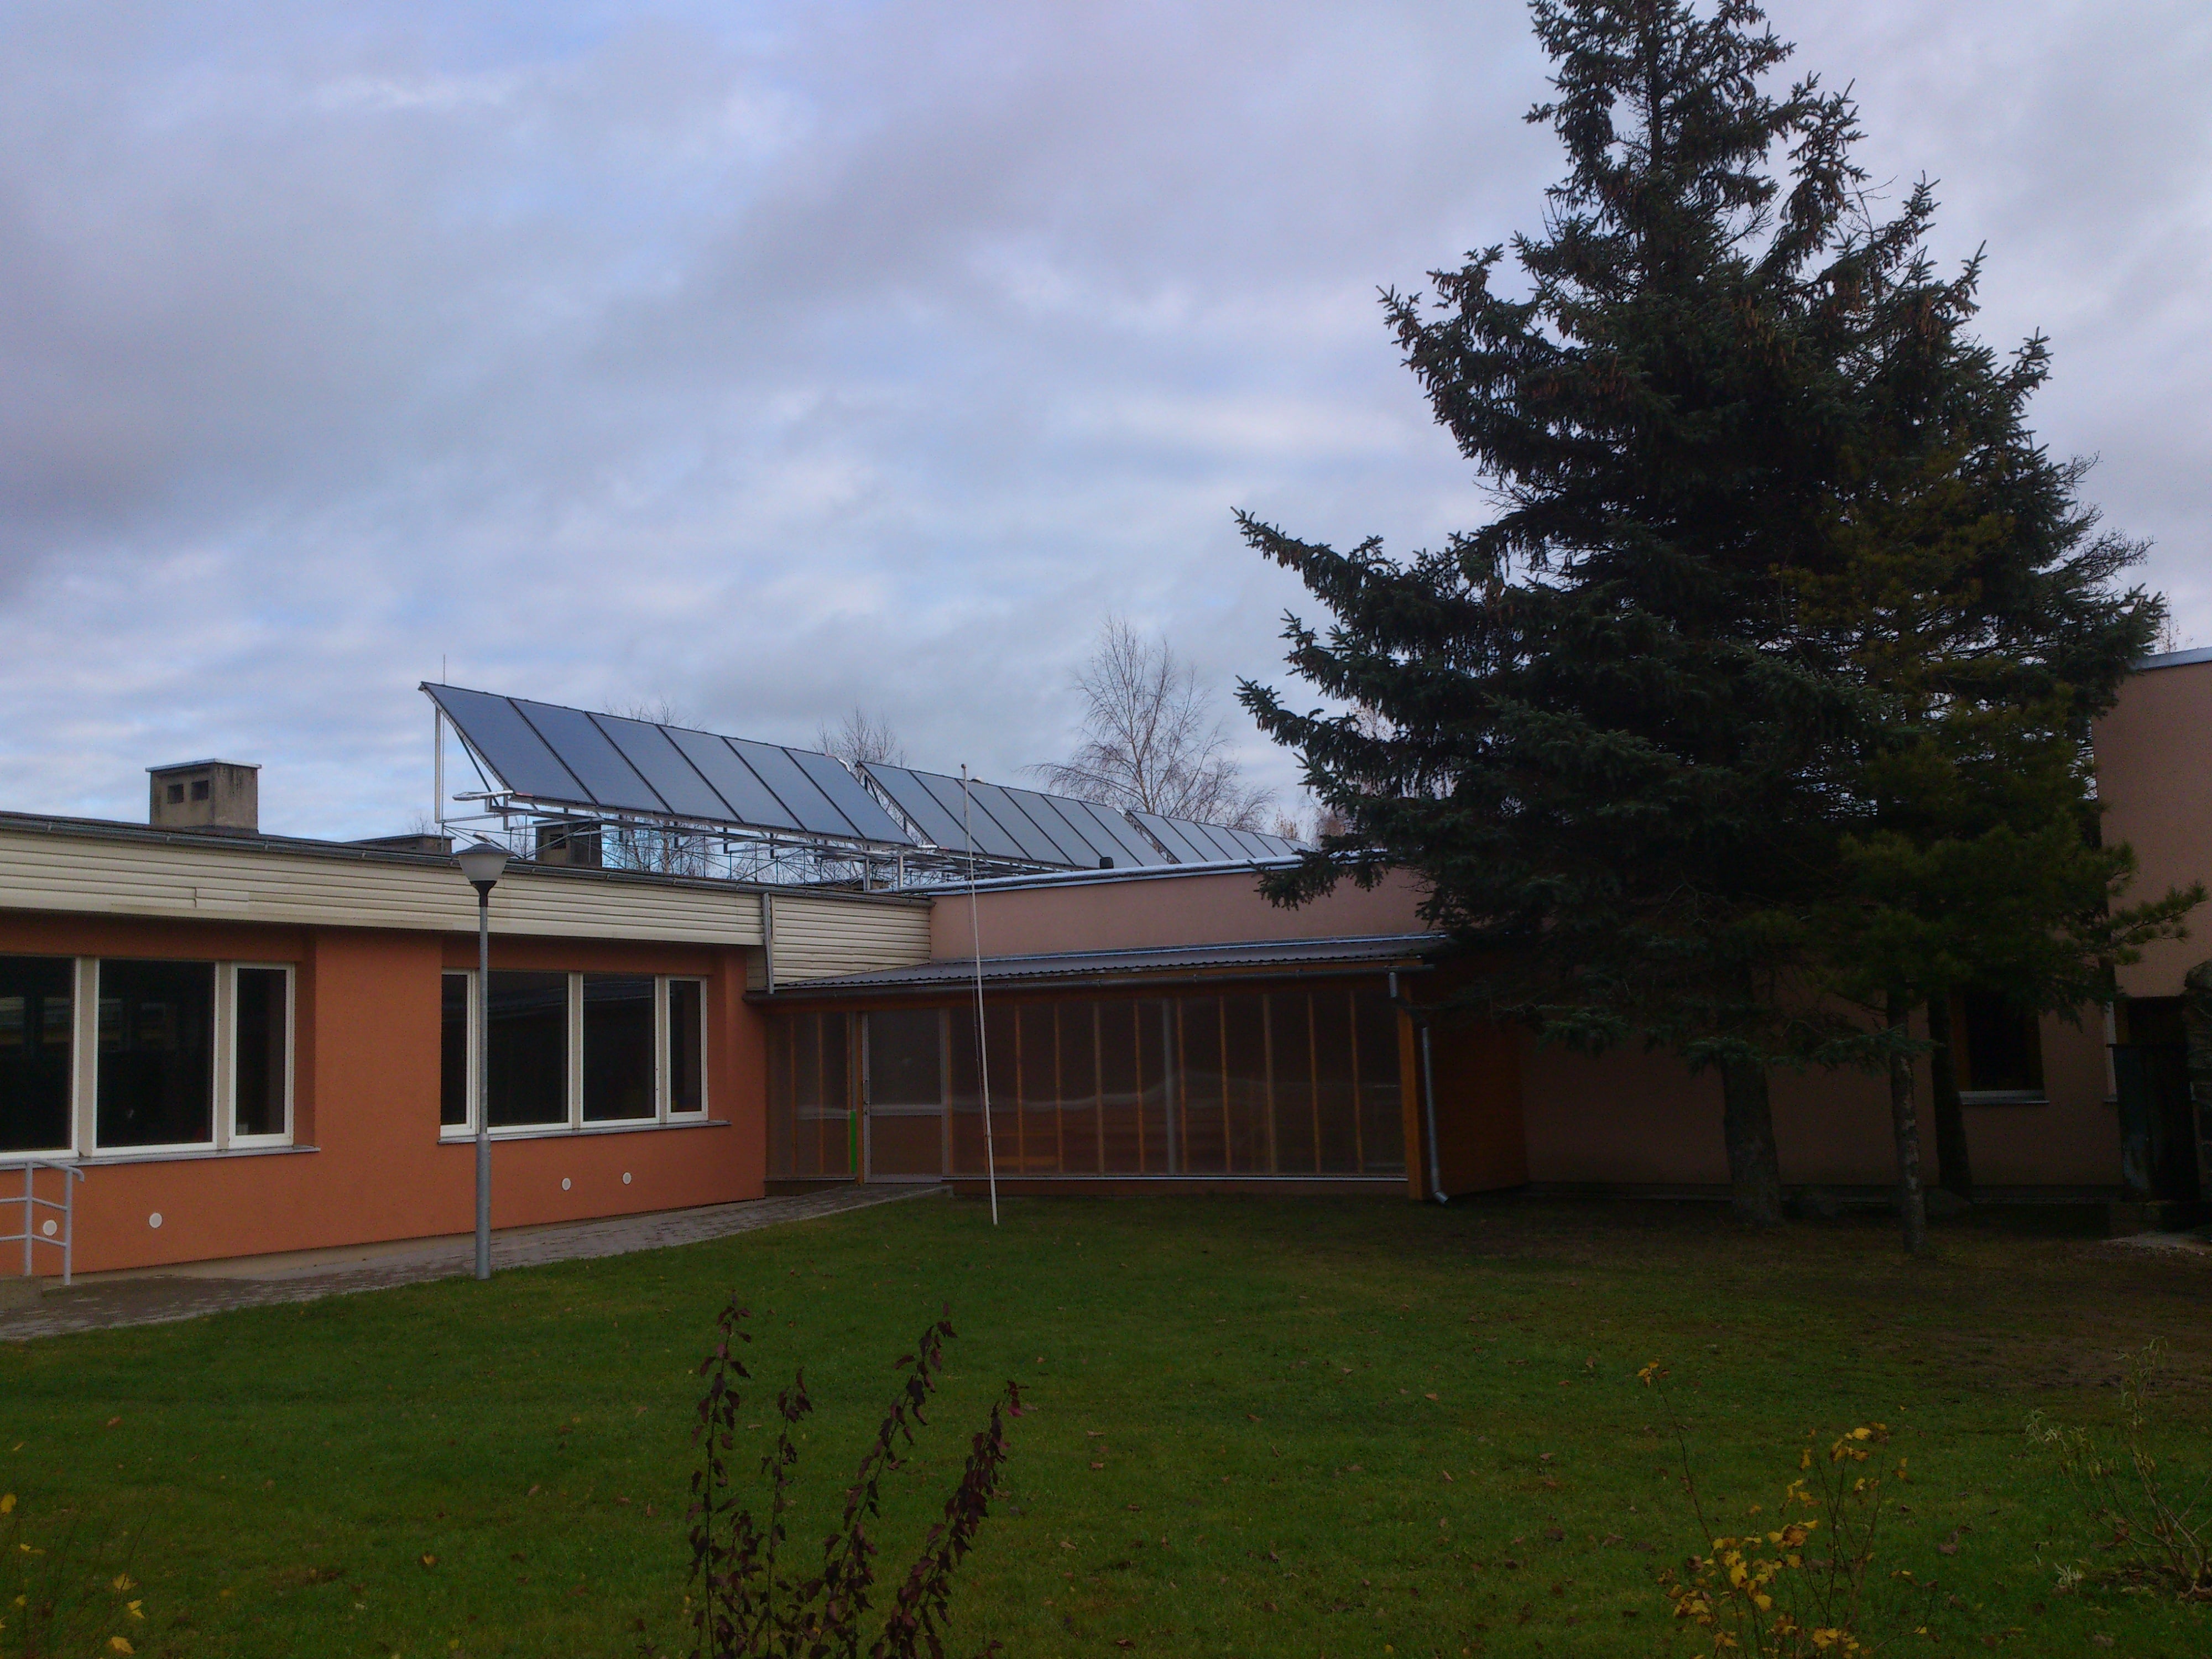 Solar collector system in Gluda kindergarten "Taurenitis", Nakotne